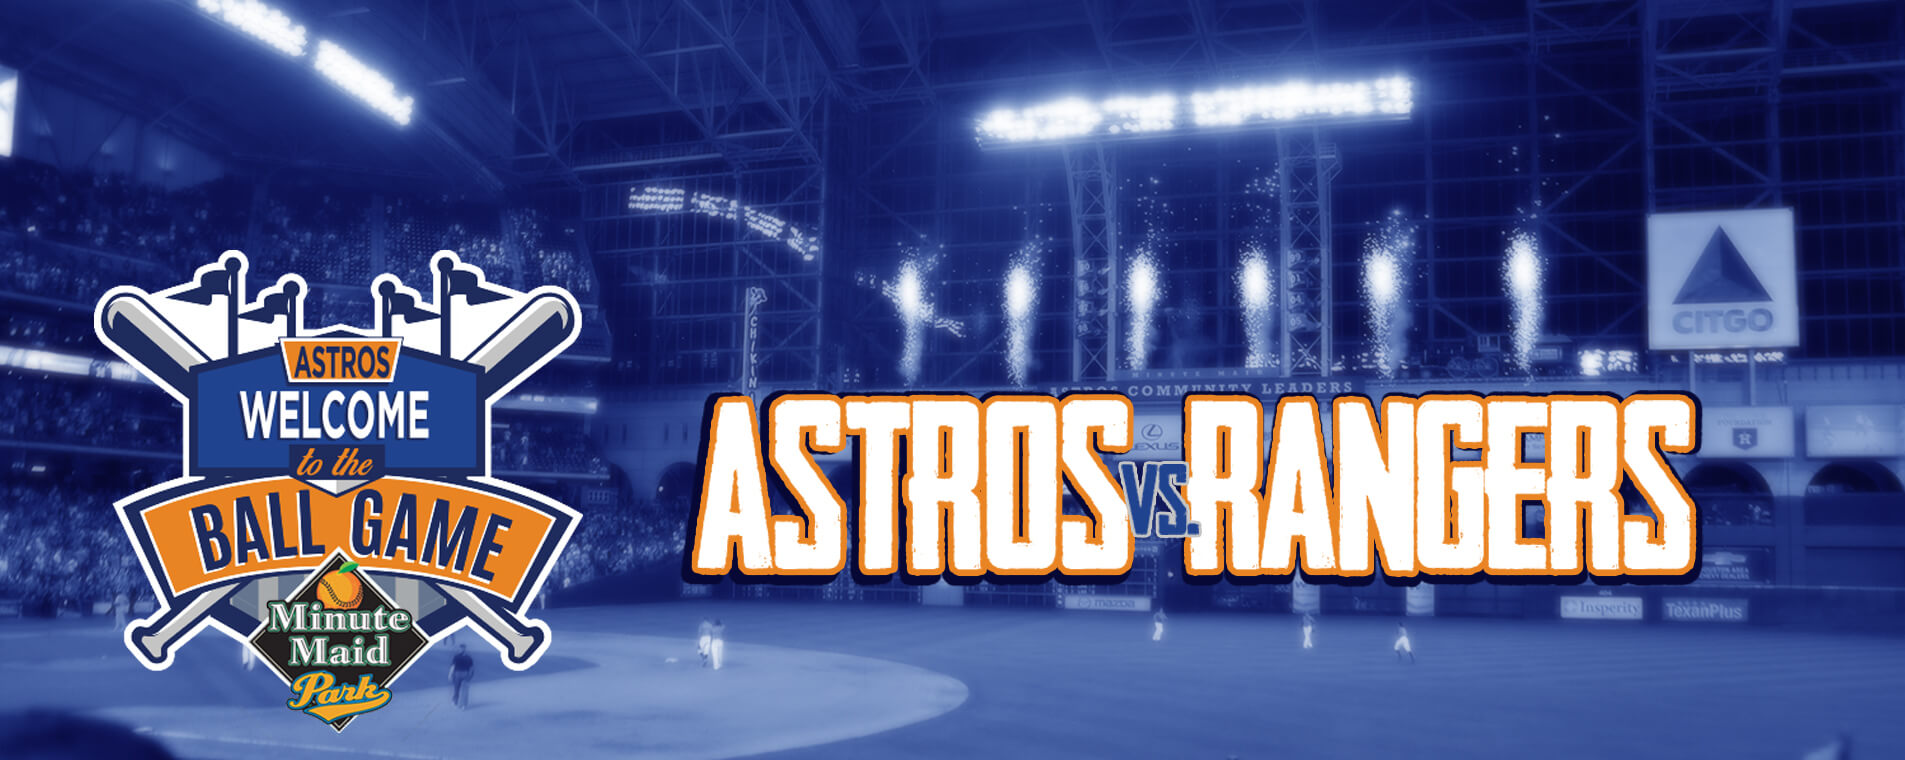 ILTA 2020 Client Appreciation Event - Astros vs Rangers Minute Maid Park